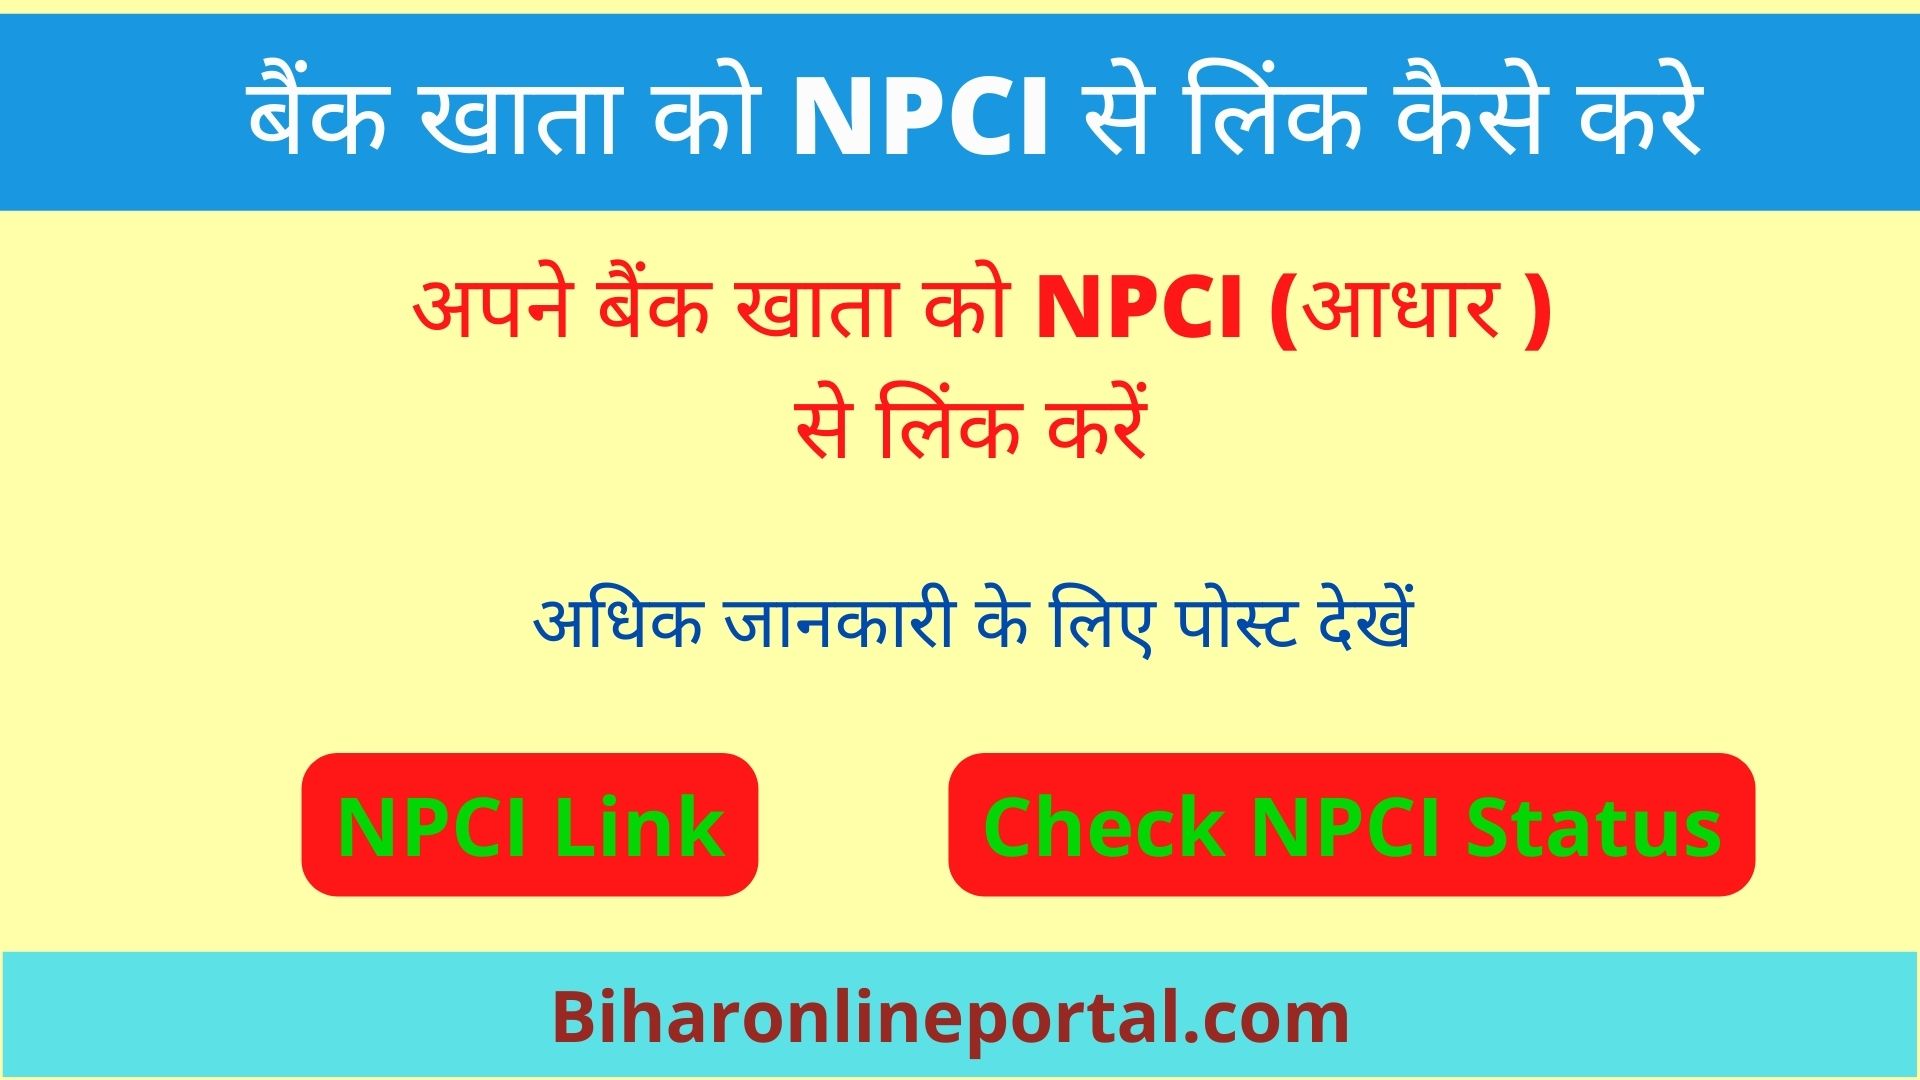 Link Bank Account and Aadhar Card to NPCI